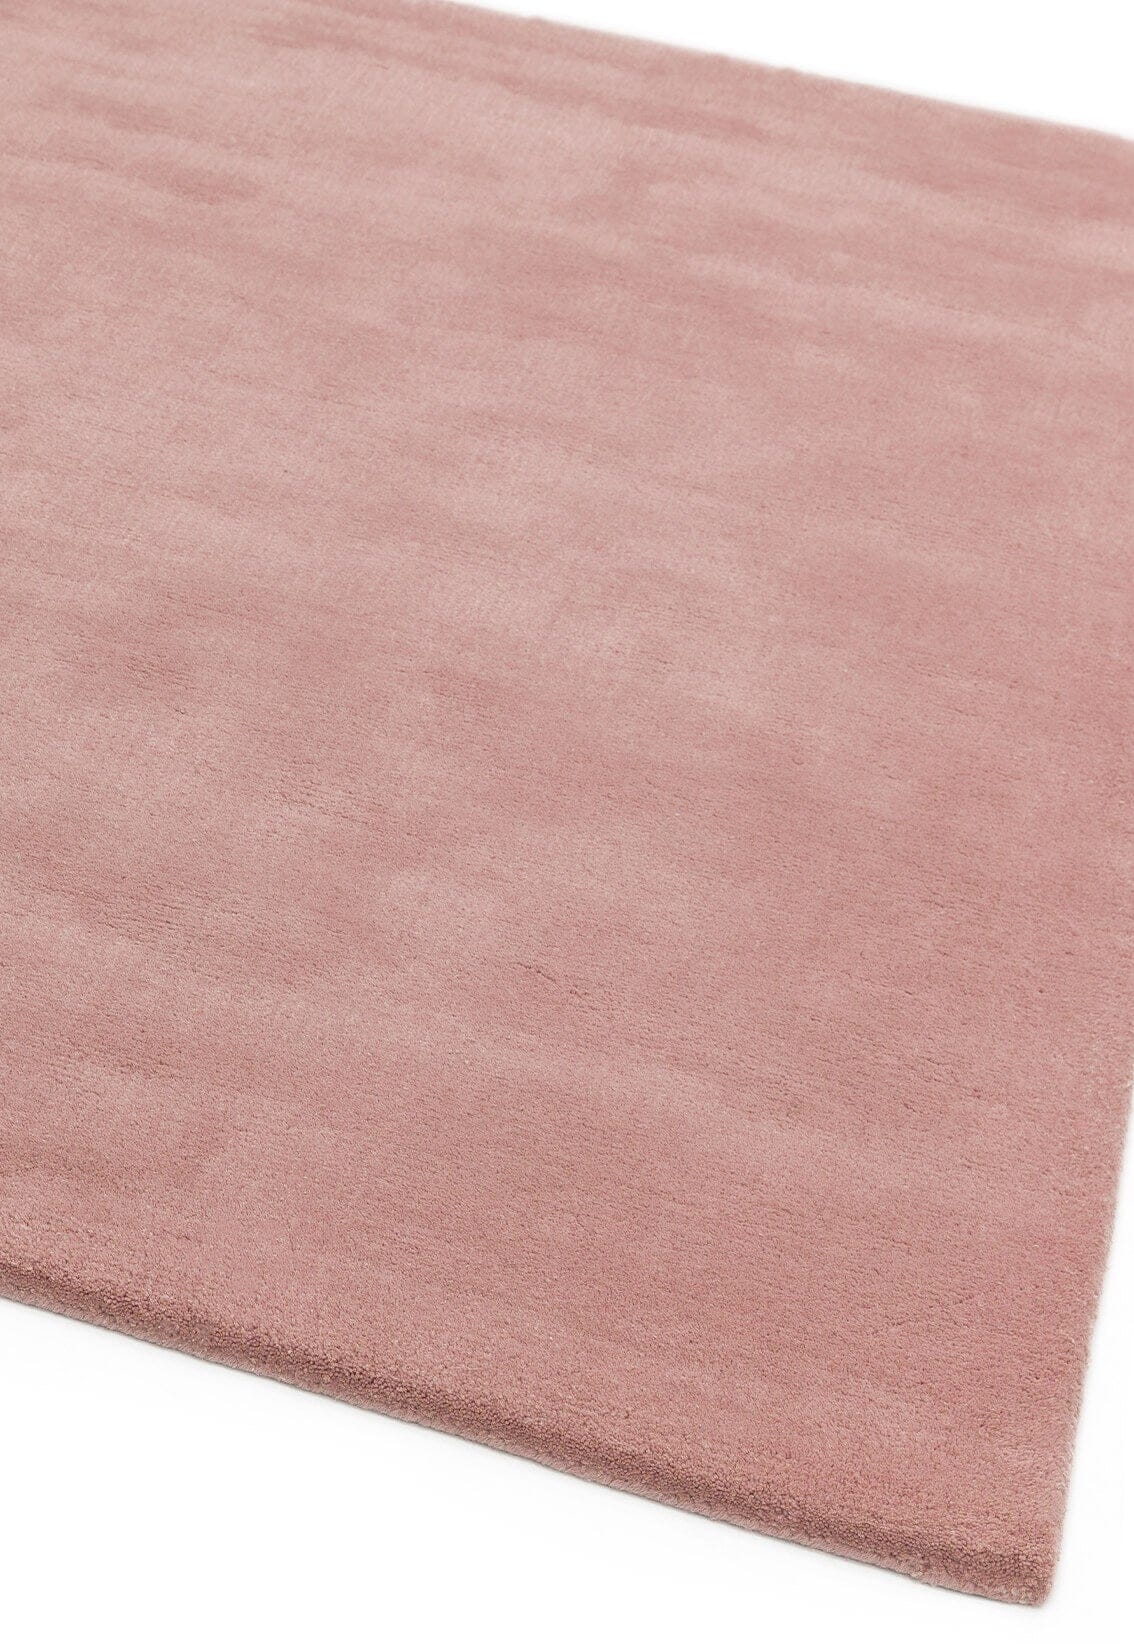  Asiatic Carpets-Asiatic Carpets Aran Hand Woven Rug Rose Pink - 160 x 230cm-Pink 213 